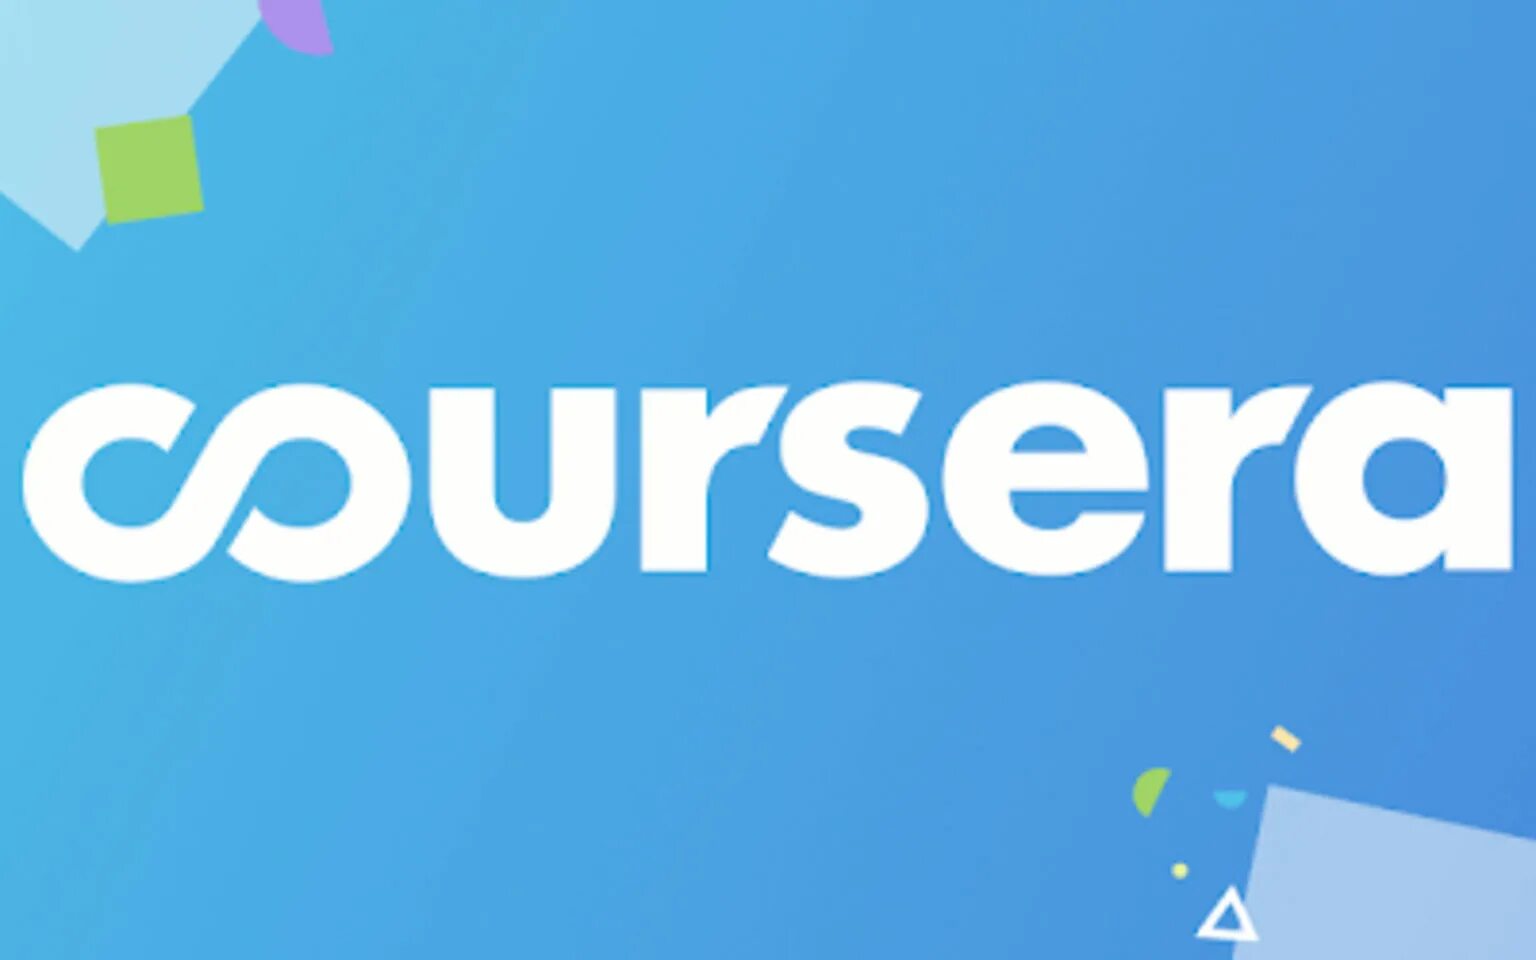 Https coursera org. Платформа Coursera. Coursera лого. Главная страница Coursera. Coursera образовательные сайты.